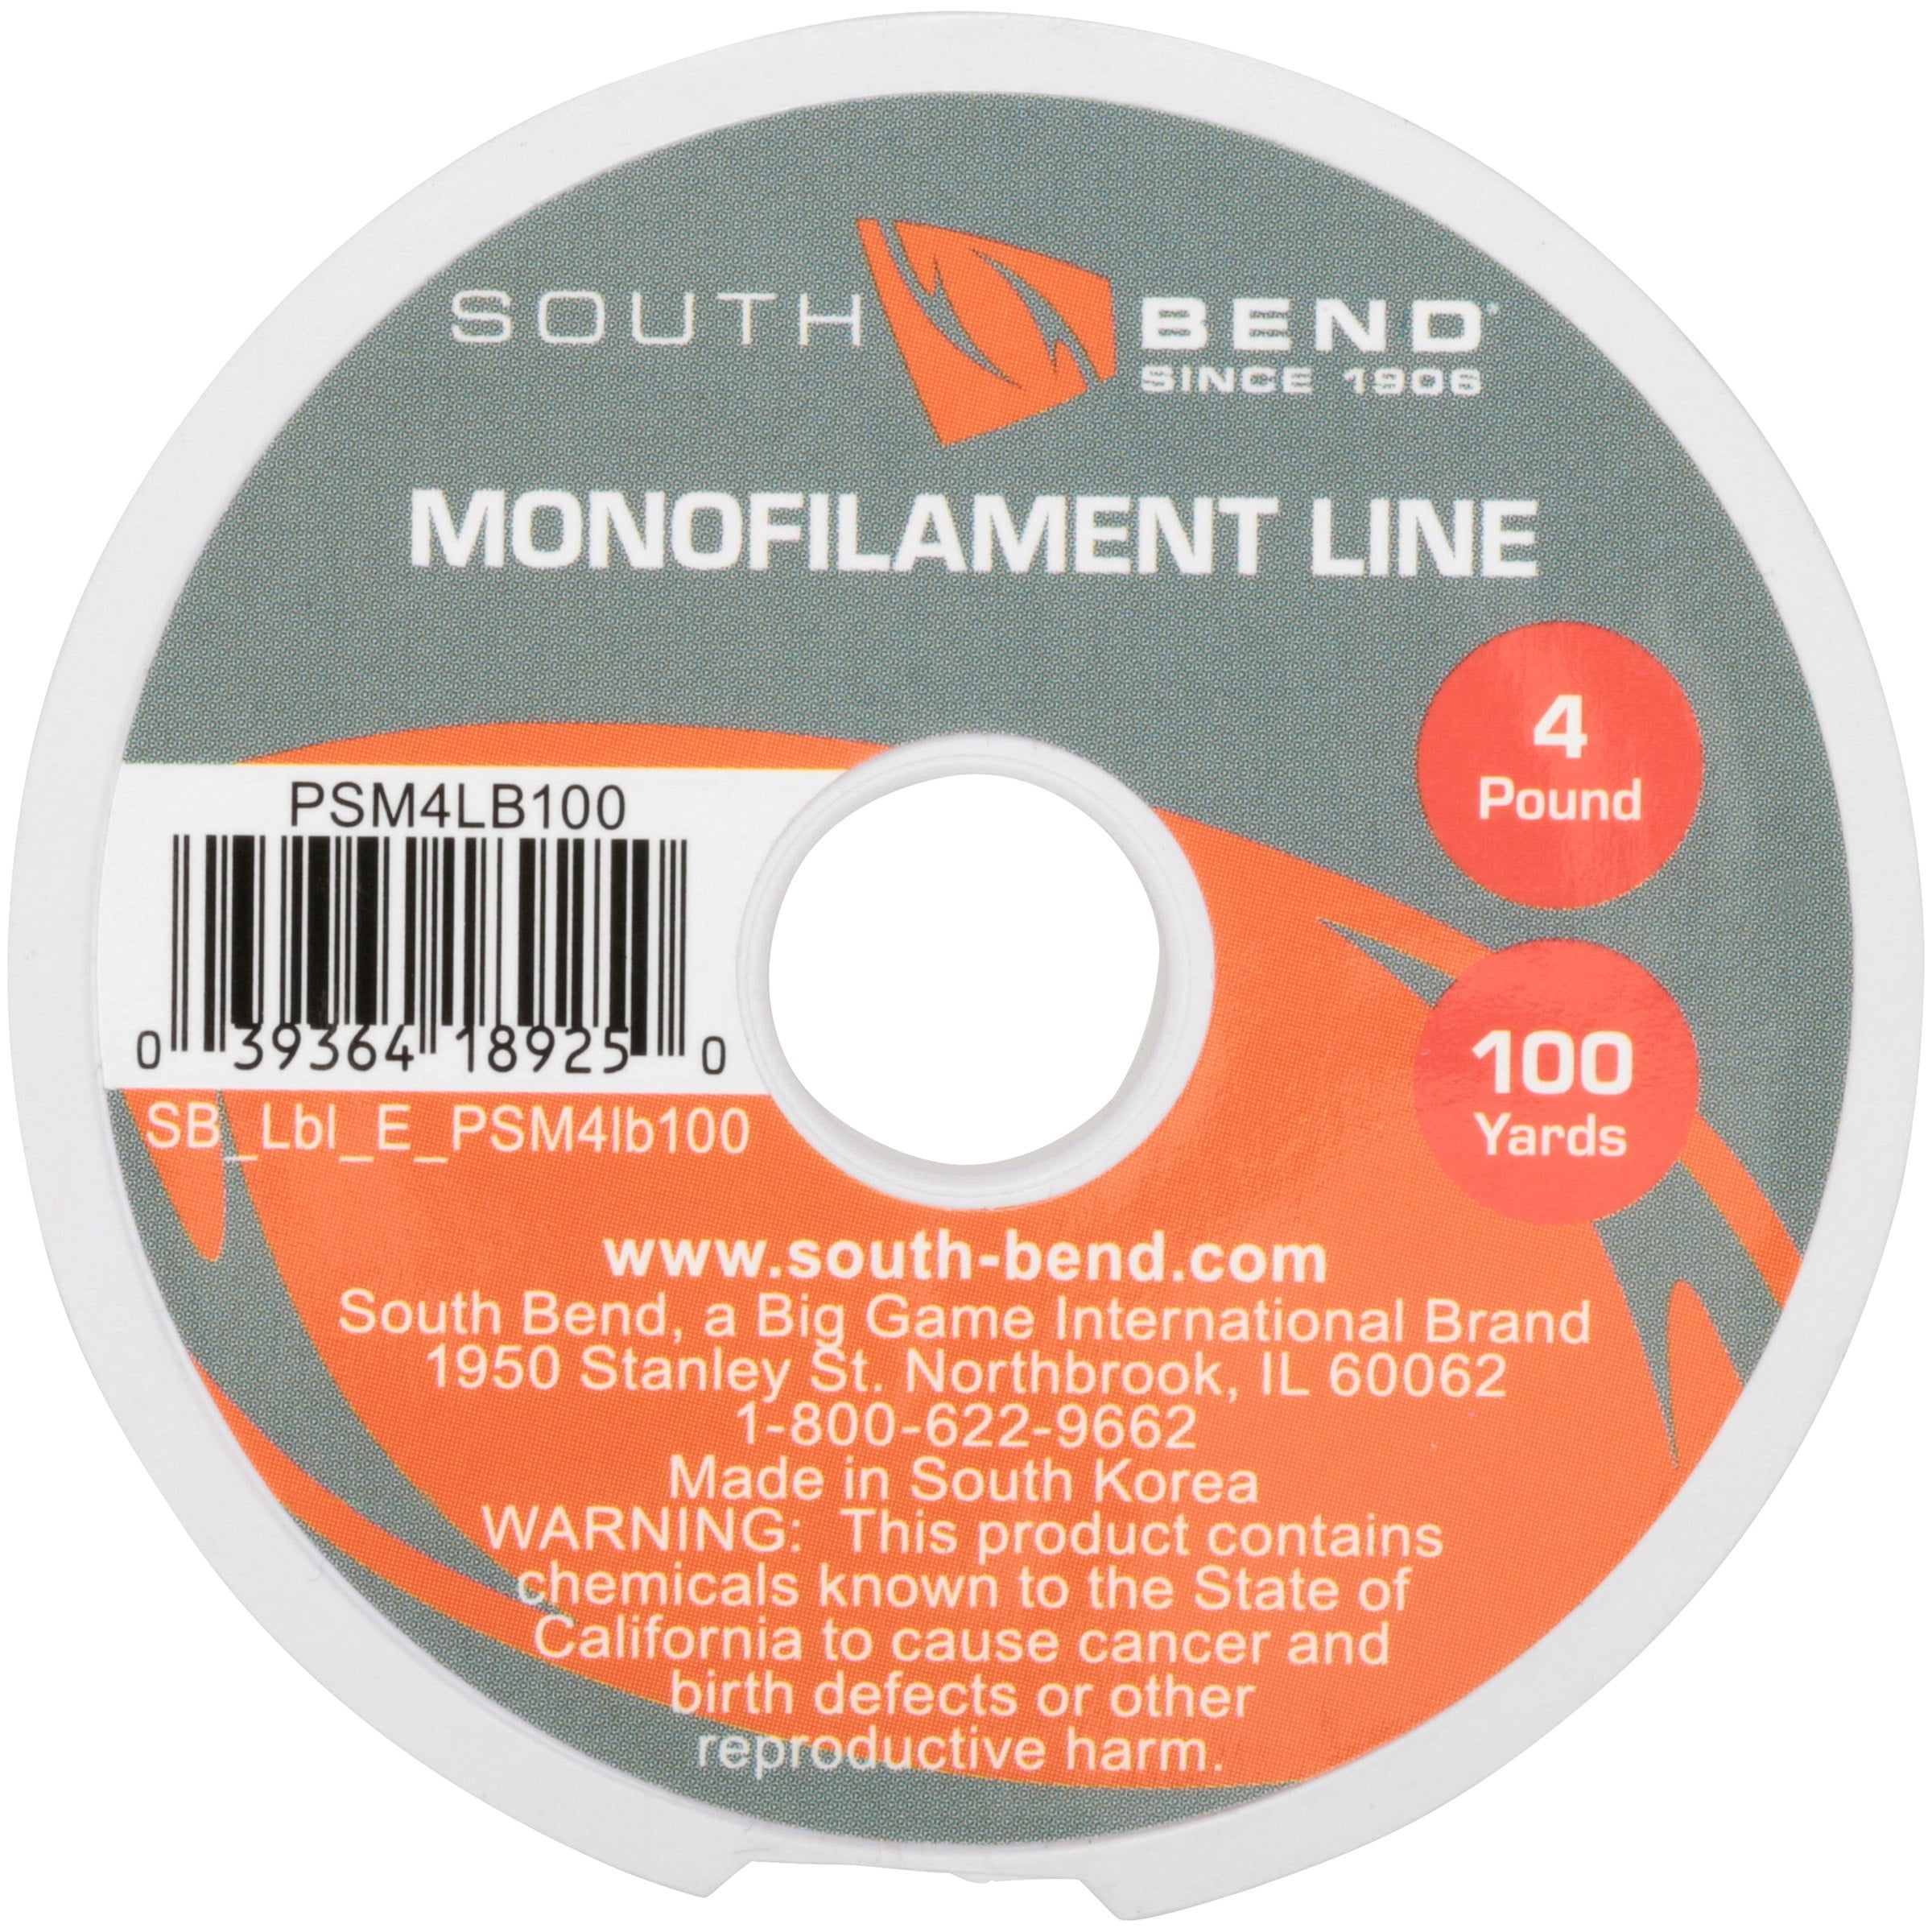 South Bend PSM4LB100 Pony Spool Mono Fishing Line, 4 lb, 100